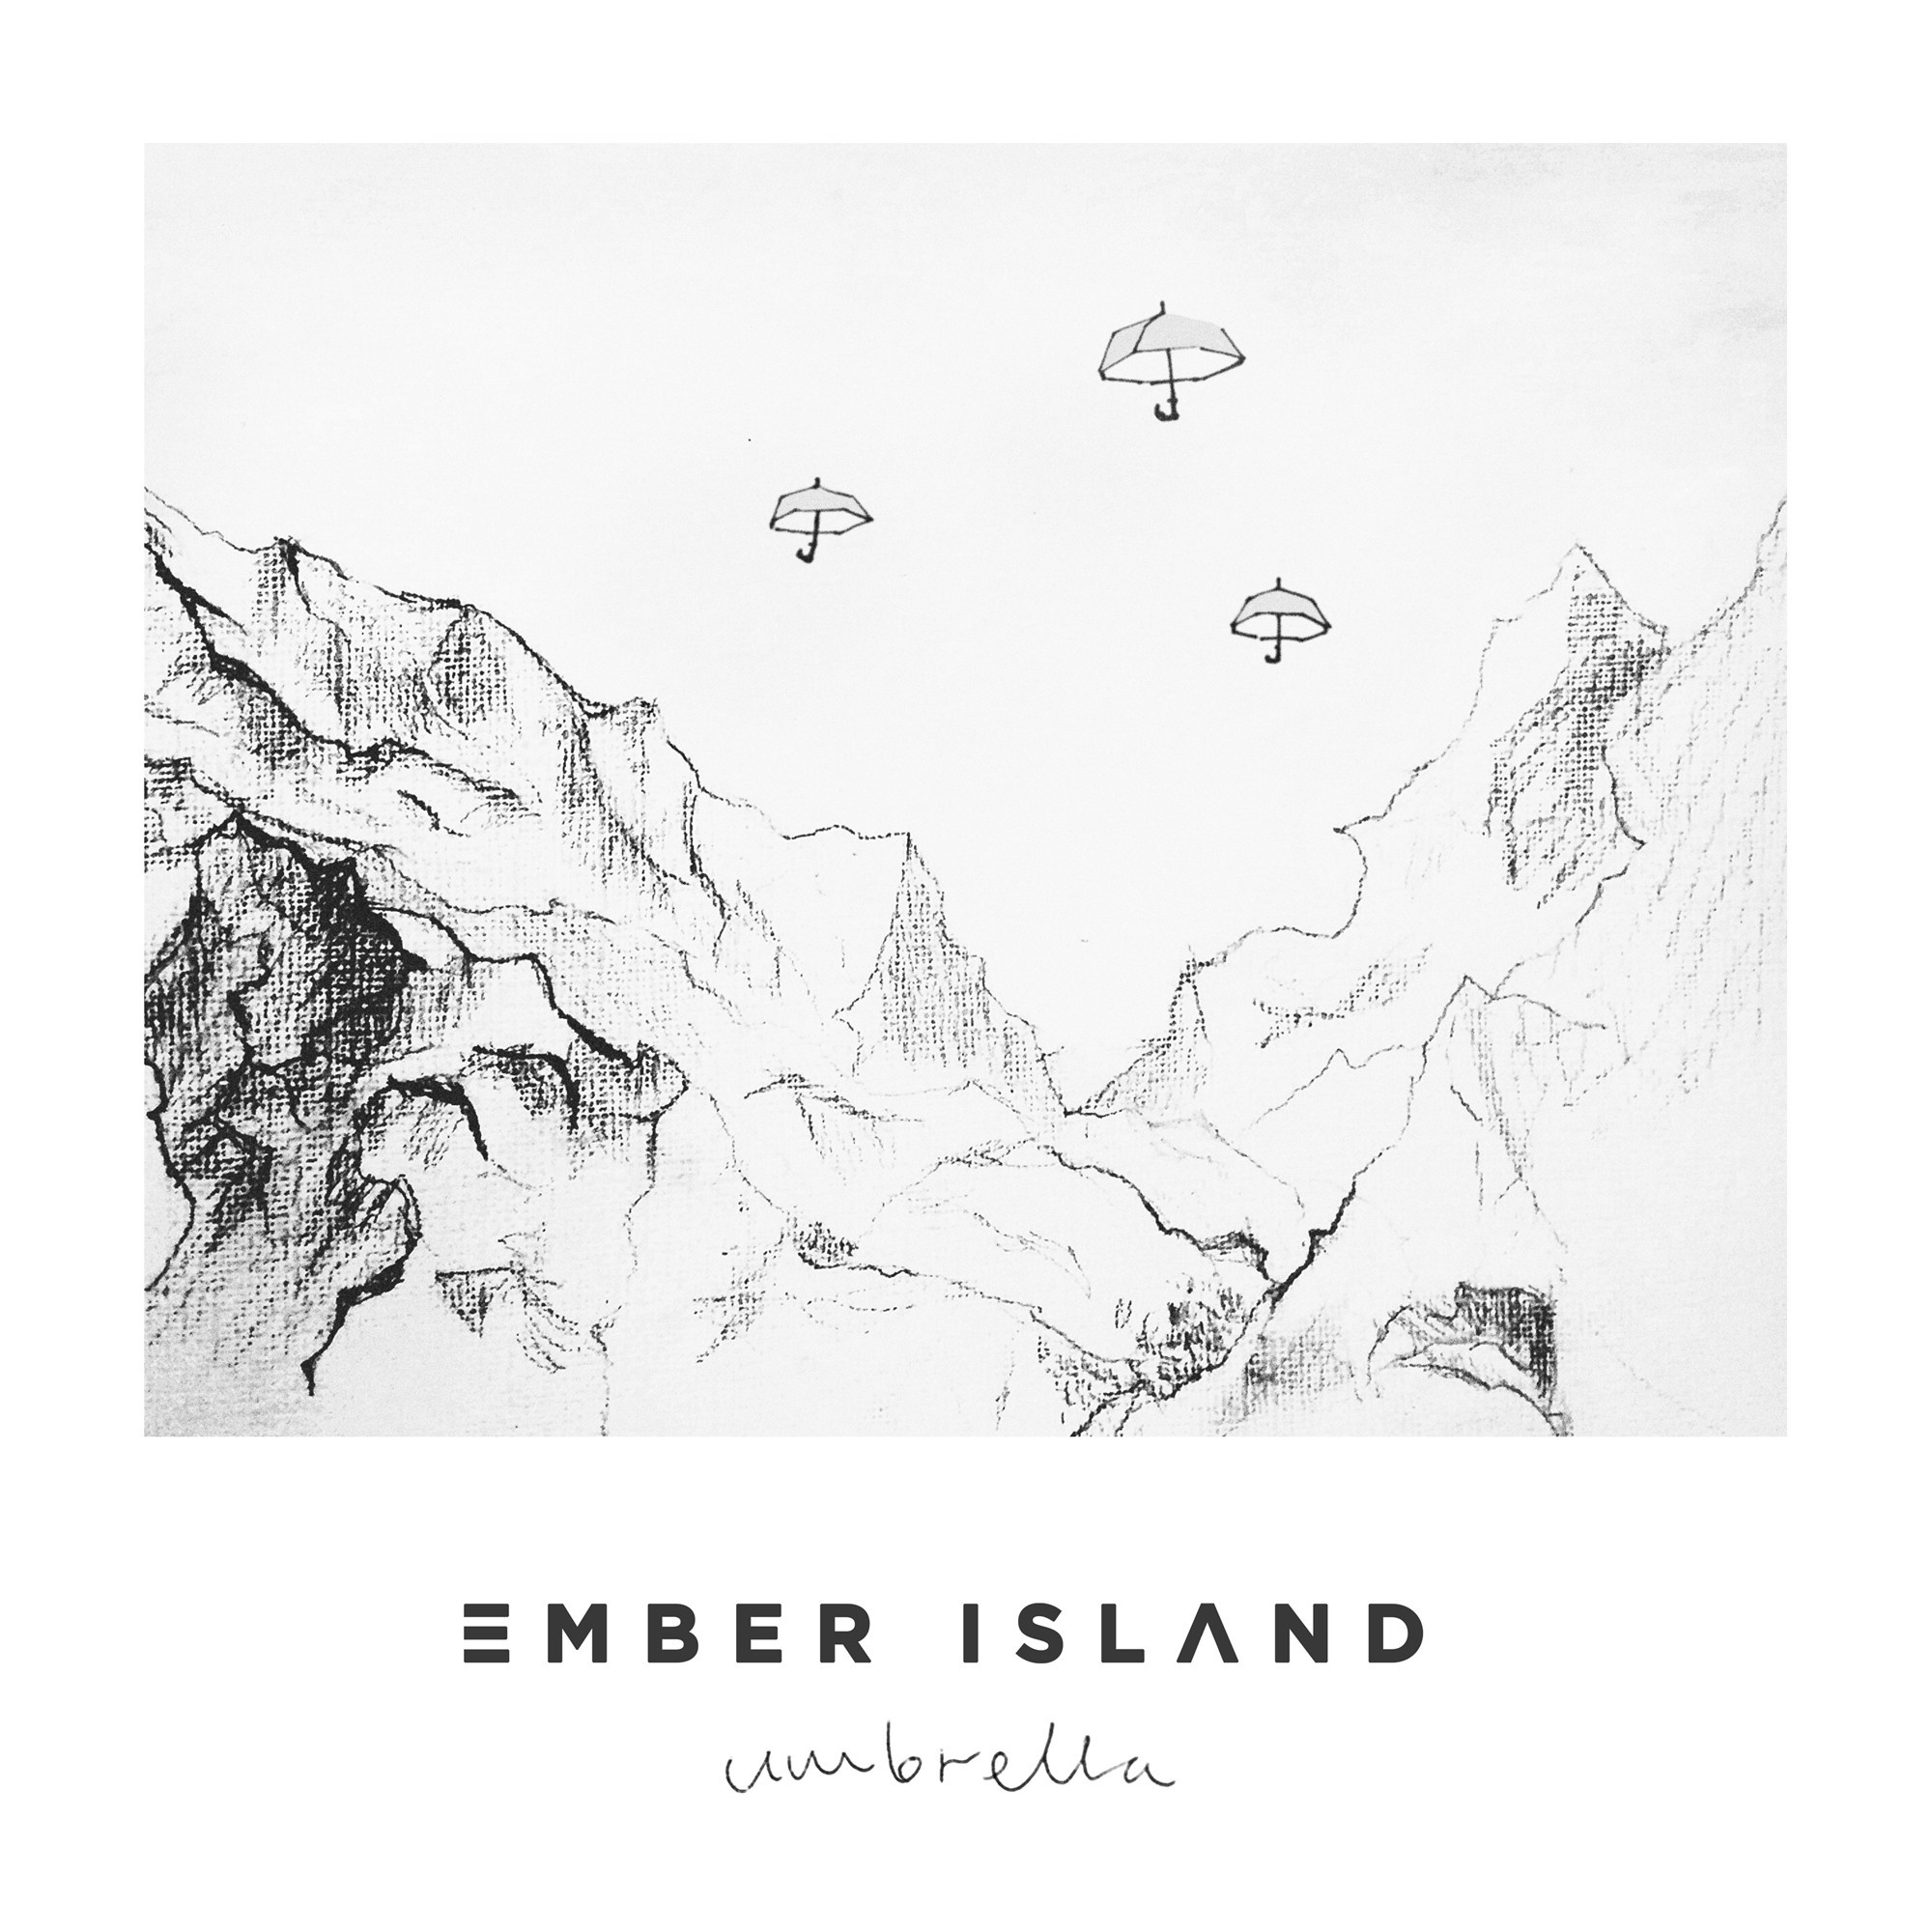 Ember island. Umbrella ember Island. Песня Umbrella ember Island. Ember Island Umbrella Fon. Ember Island Umbrella Slowed+Remix.